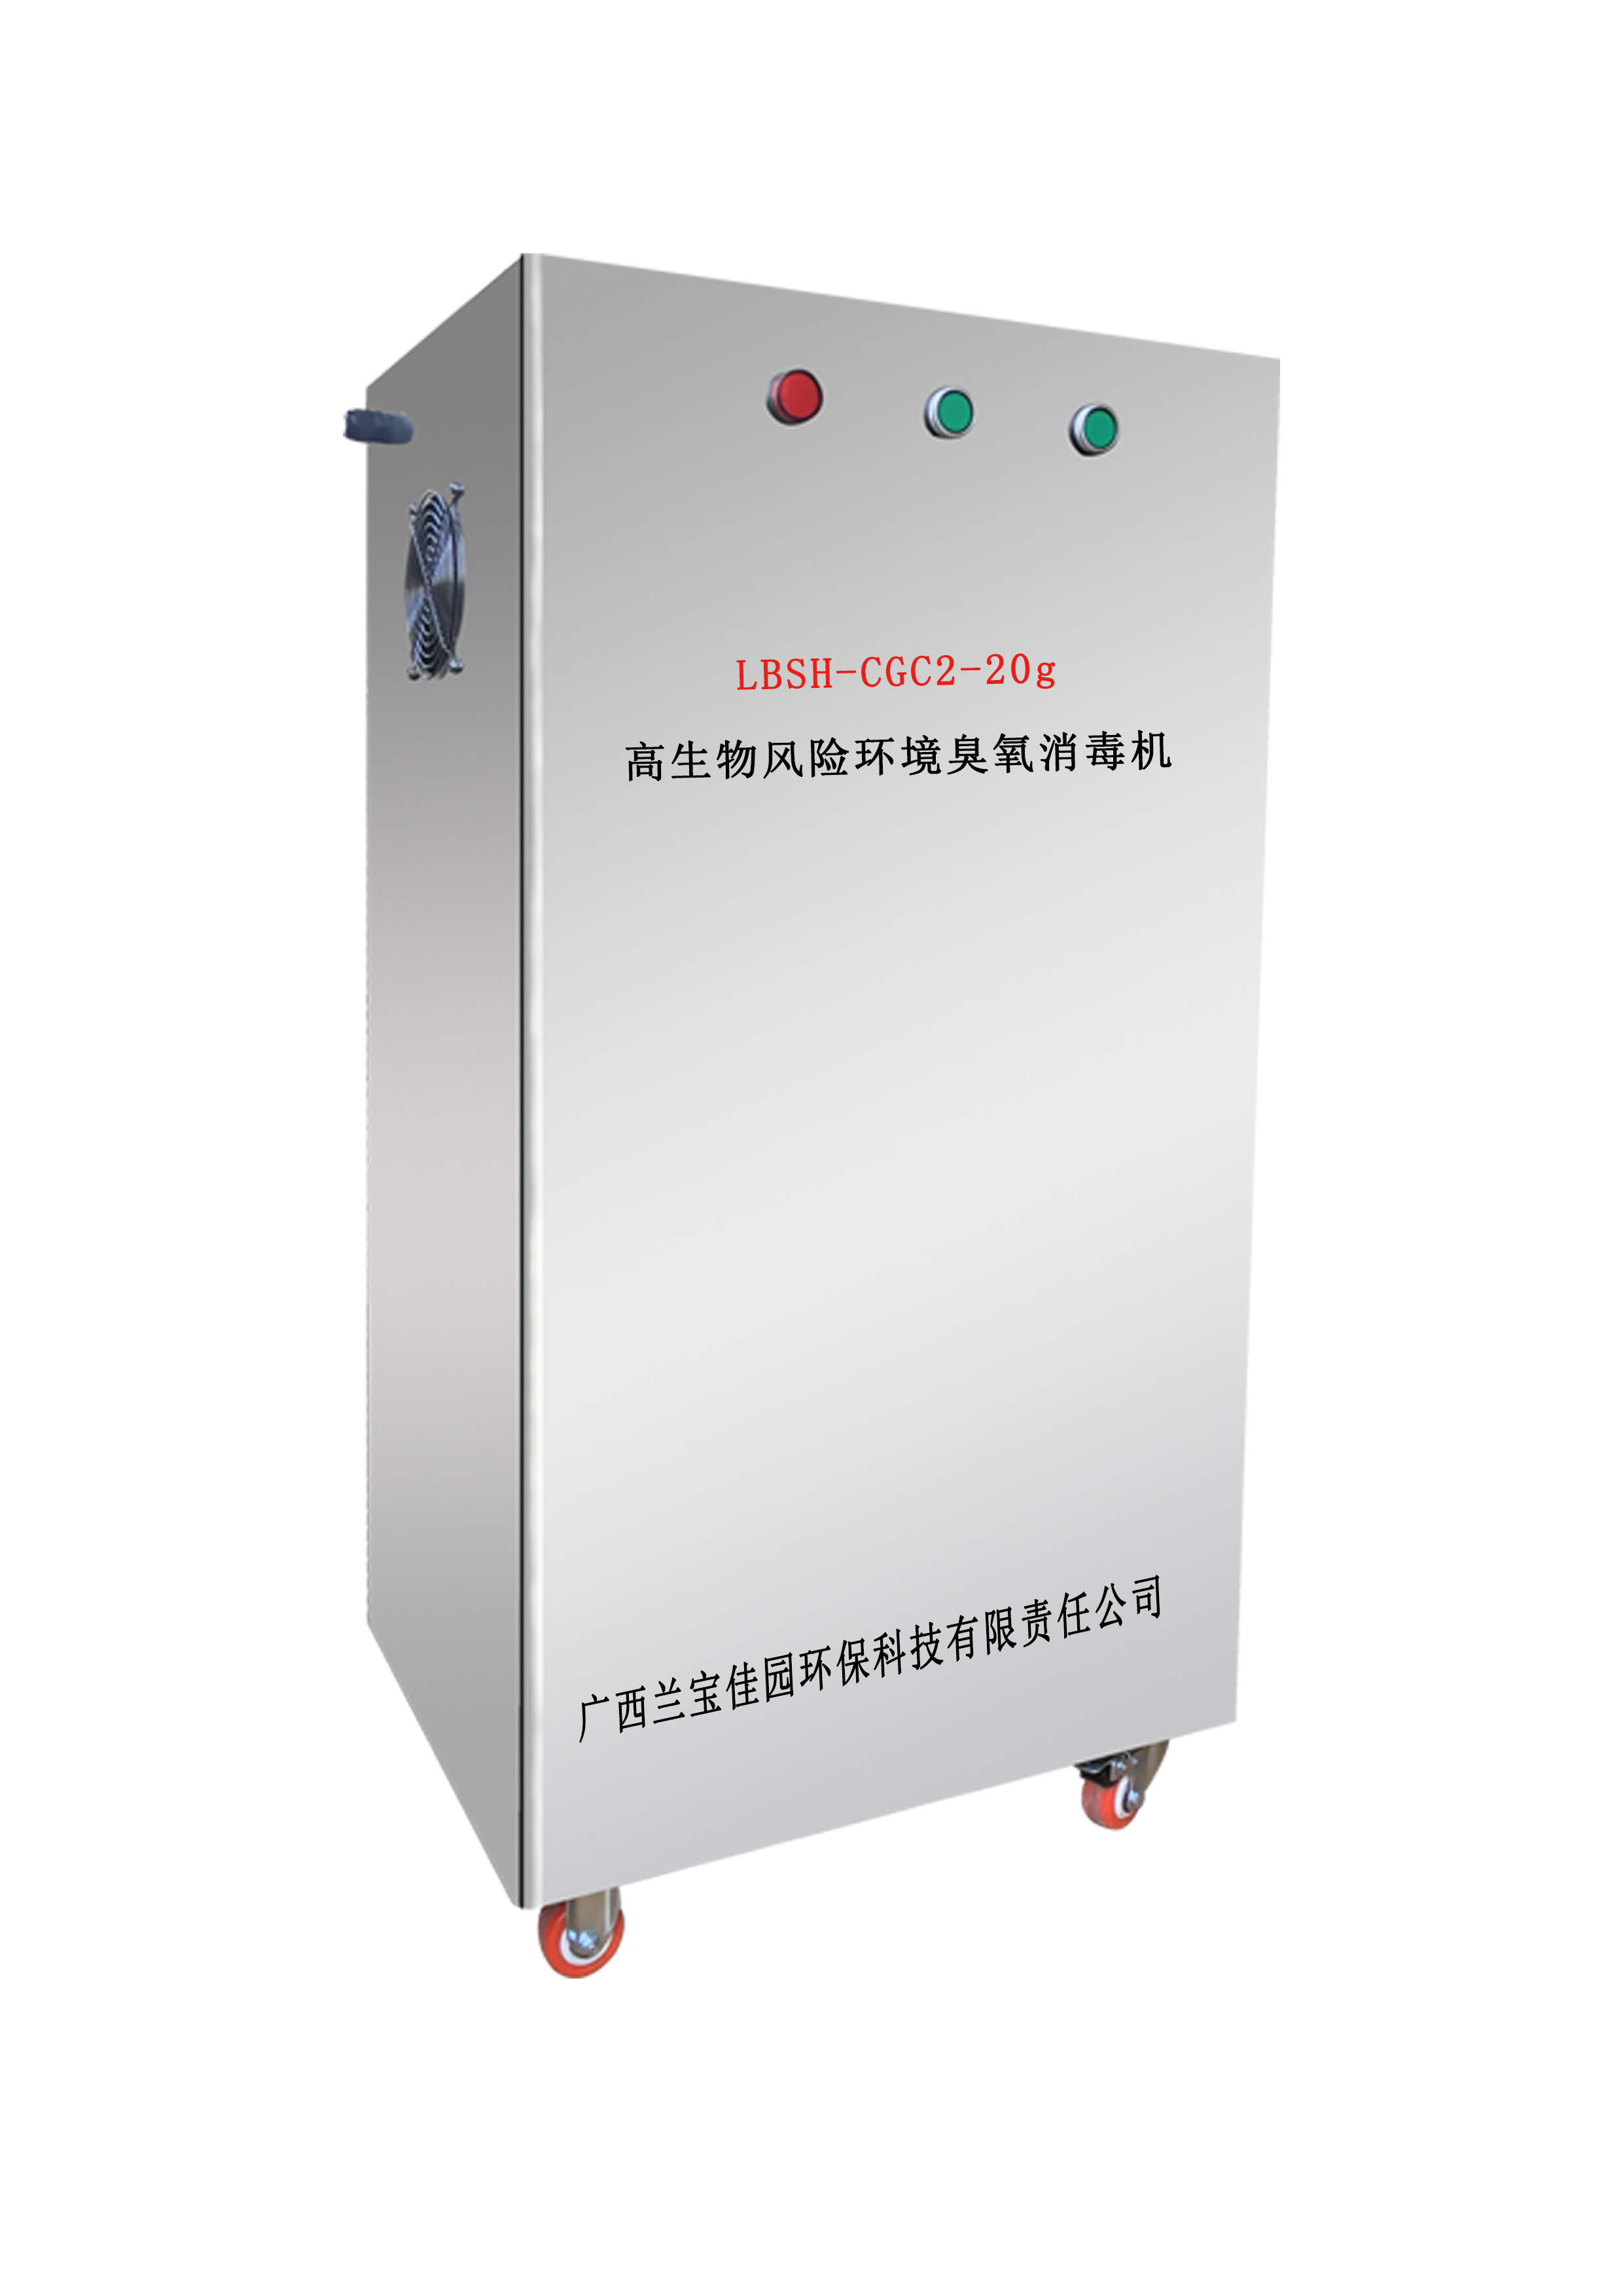 LBSH-CGC2-20g生物环境臭氧消毒机不锈钢机壳